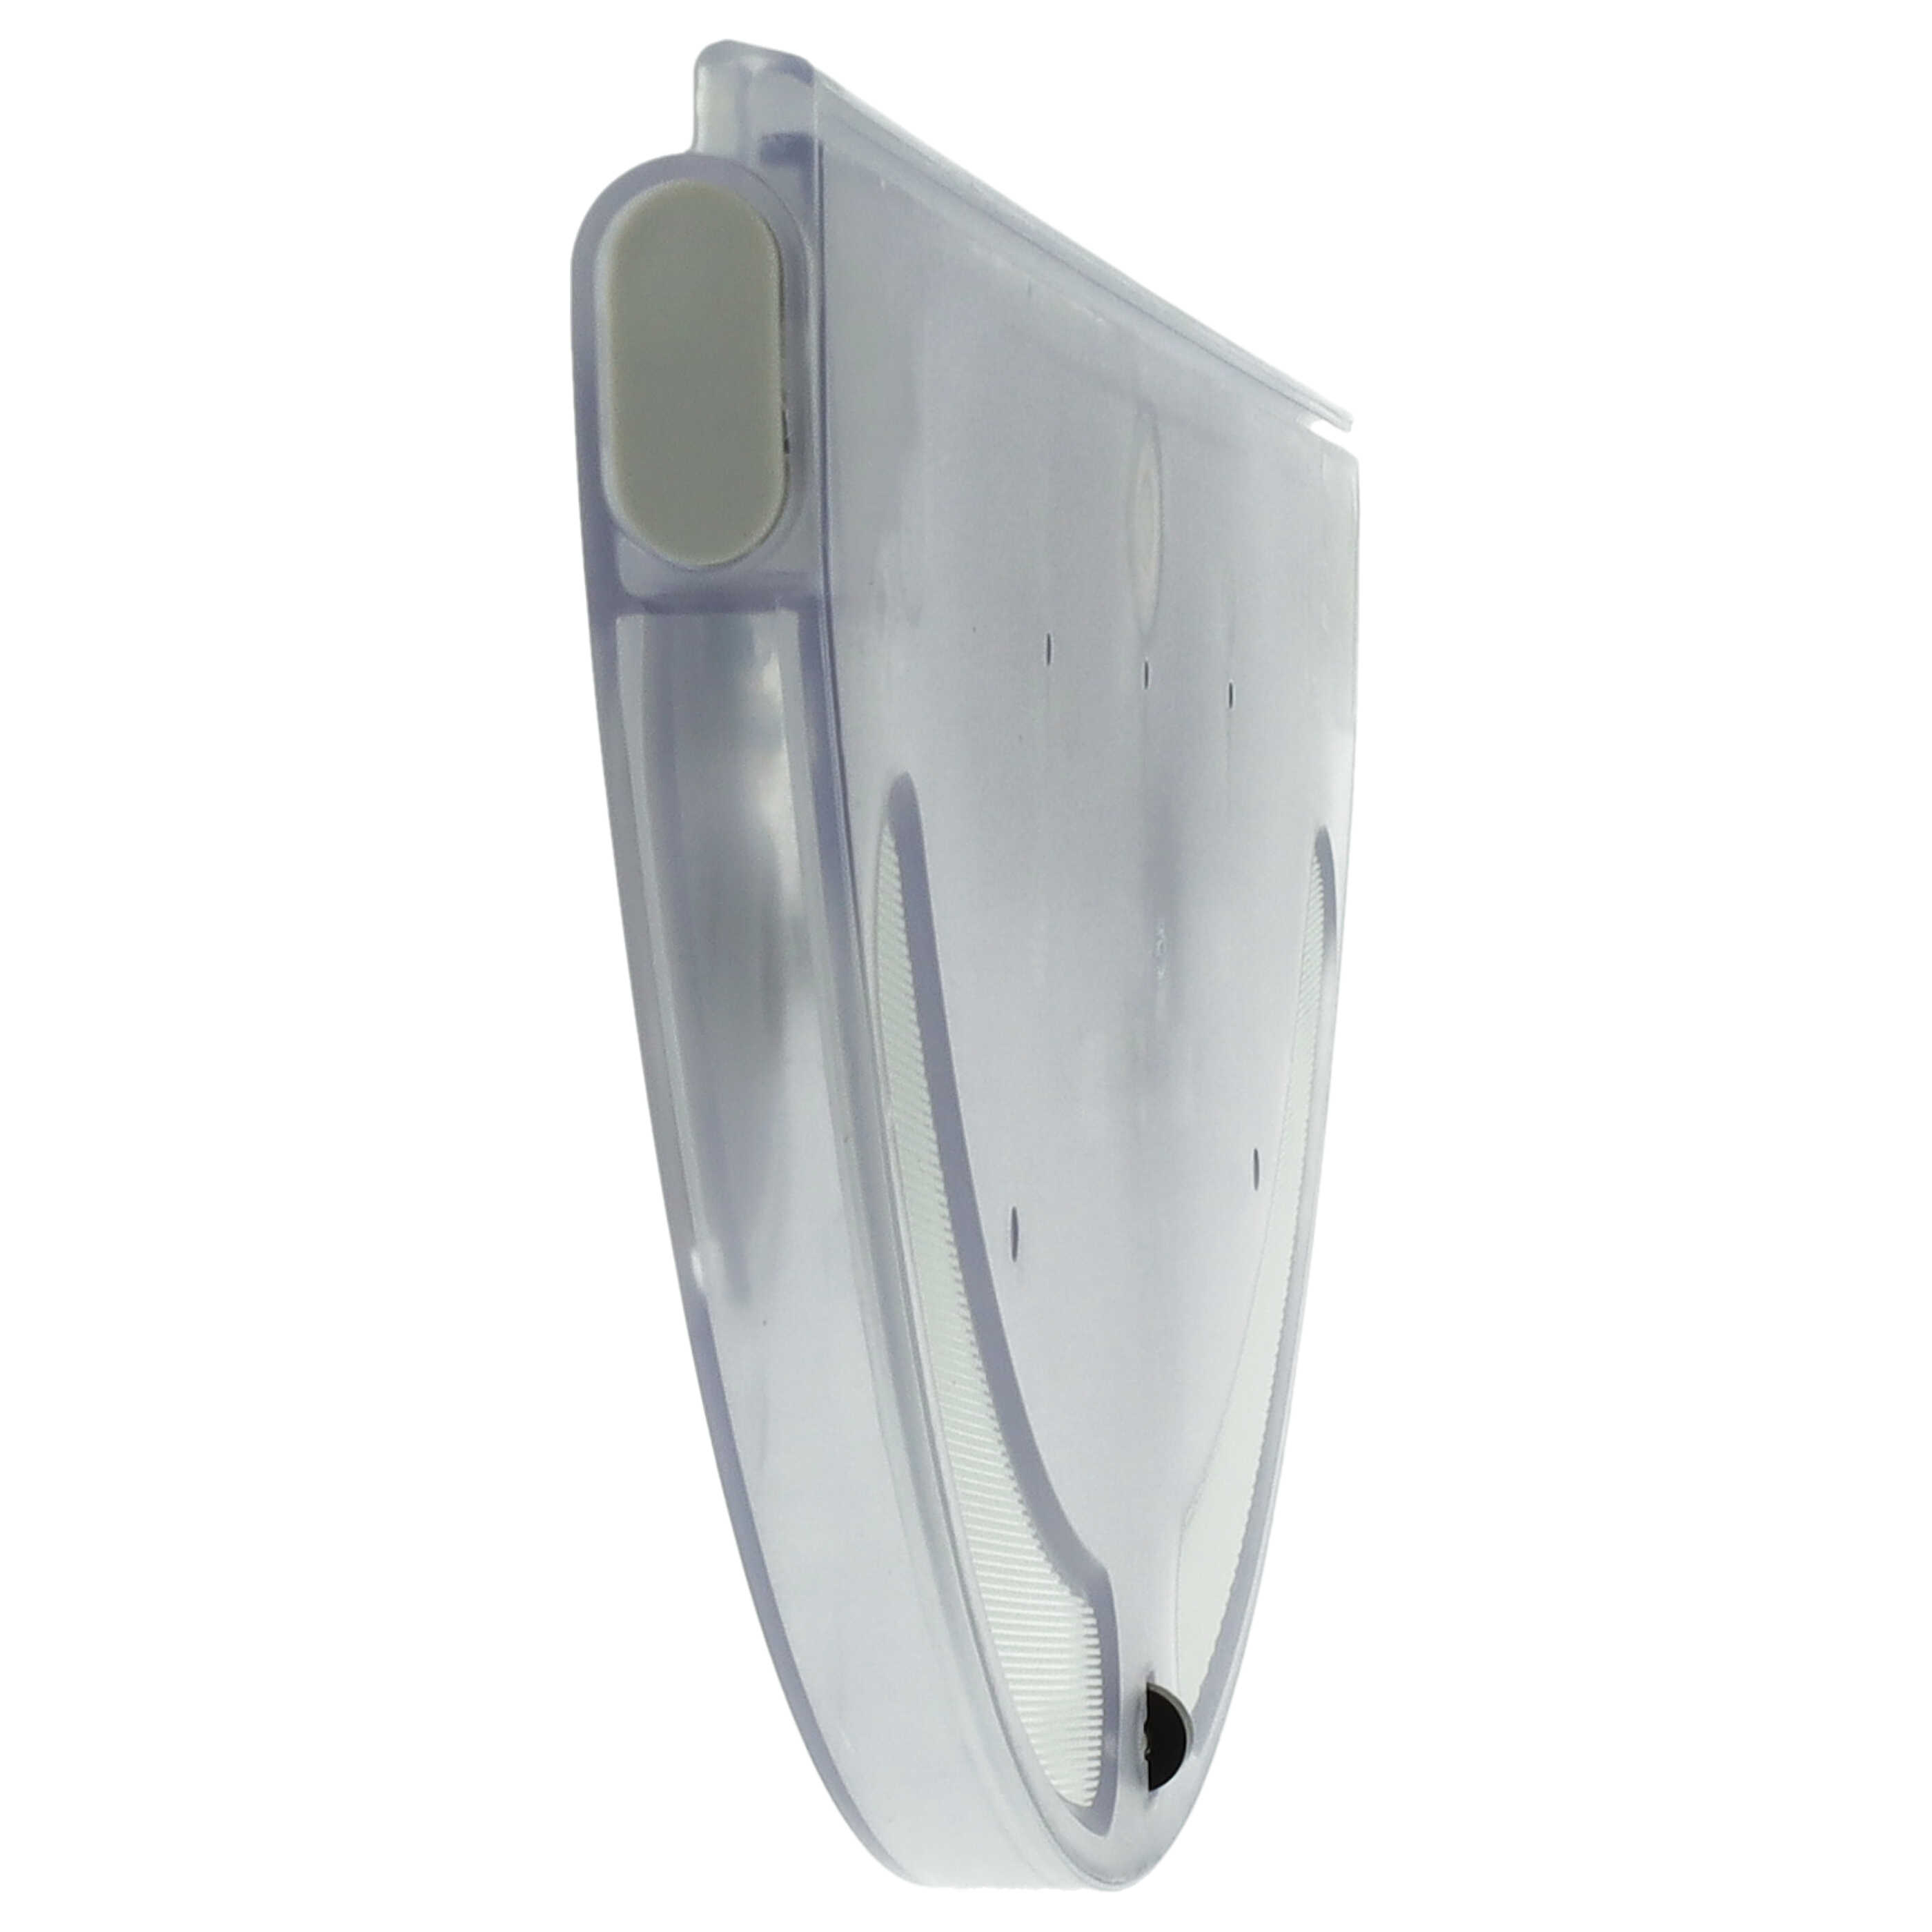 Mop Plate suitable for Xiaomi Mijia 1C Robot Vacuum Cleaner - ABS Plastic, transparent